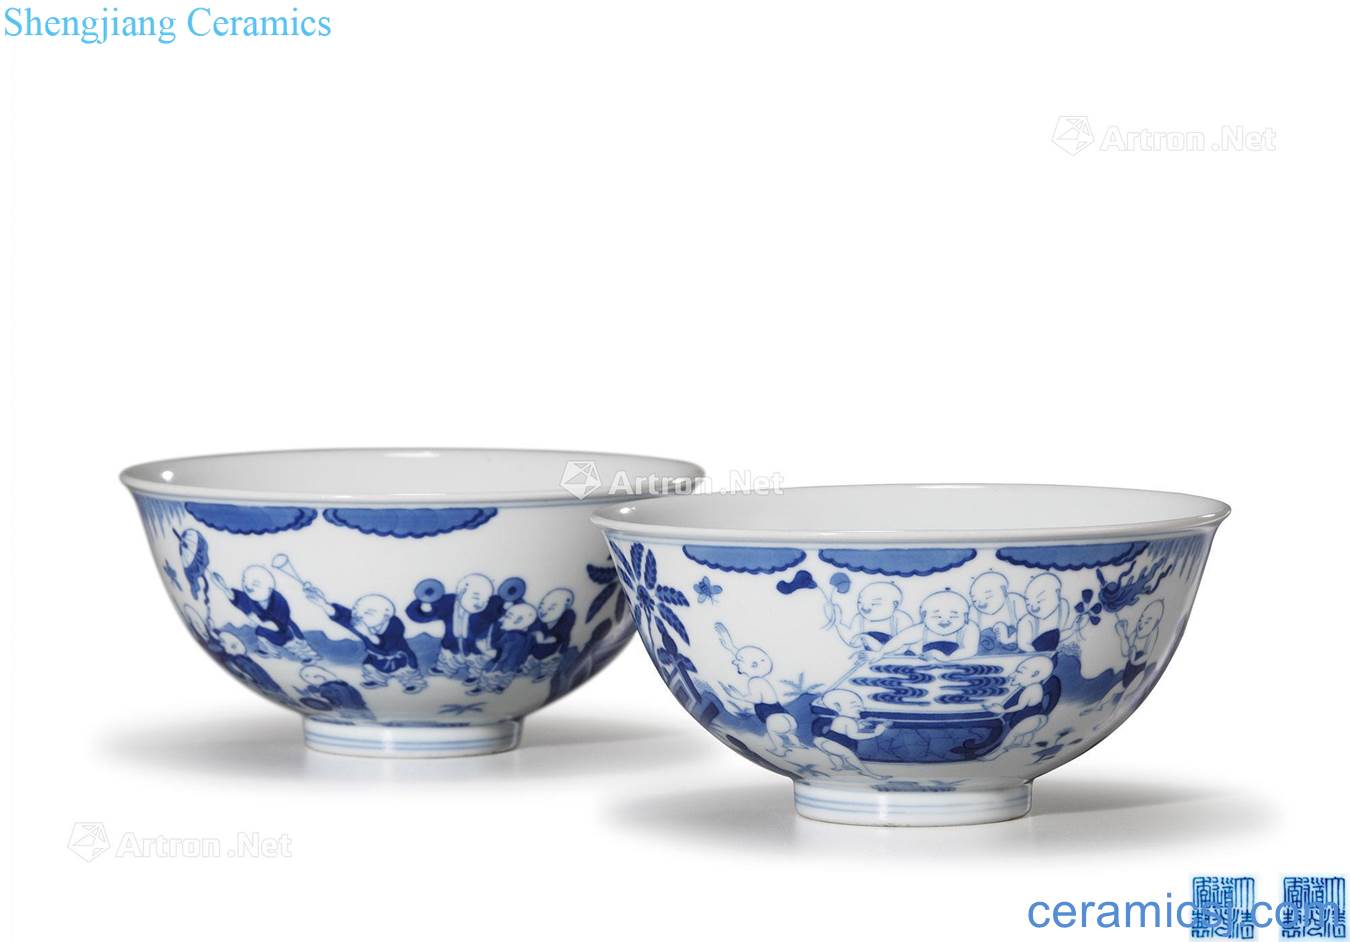 Qing daoguang Baby blue courtyard scene graph bowl (a)